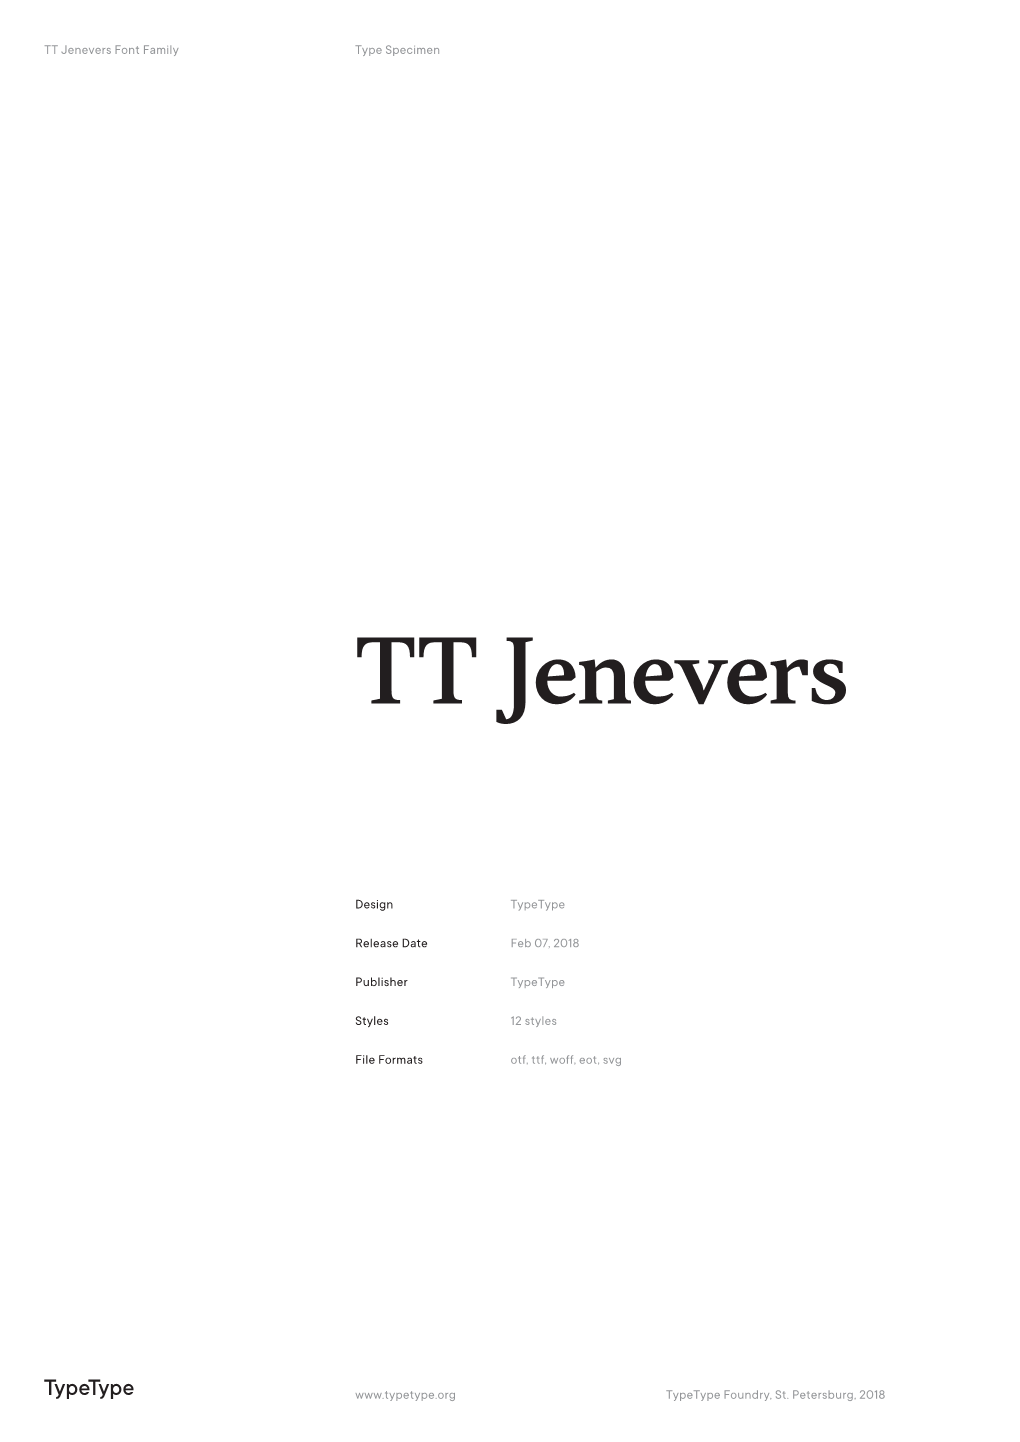 TT Jenevers PDF Type Specimen